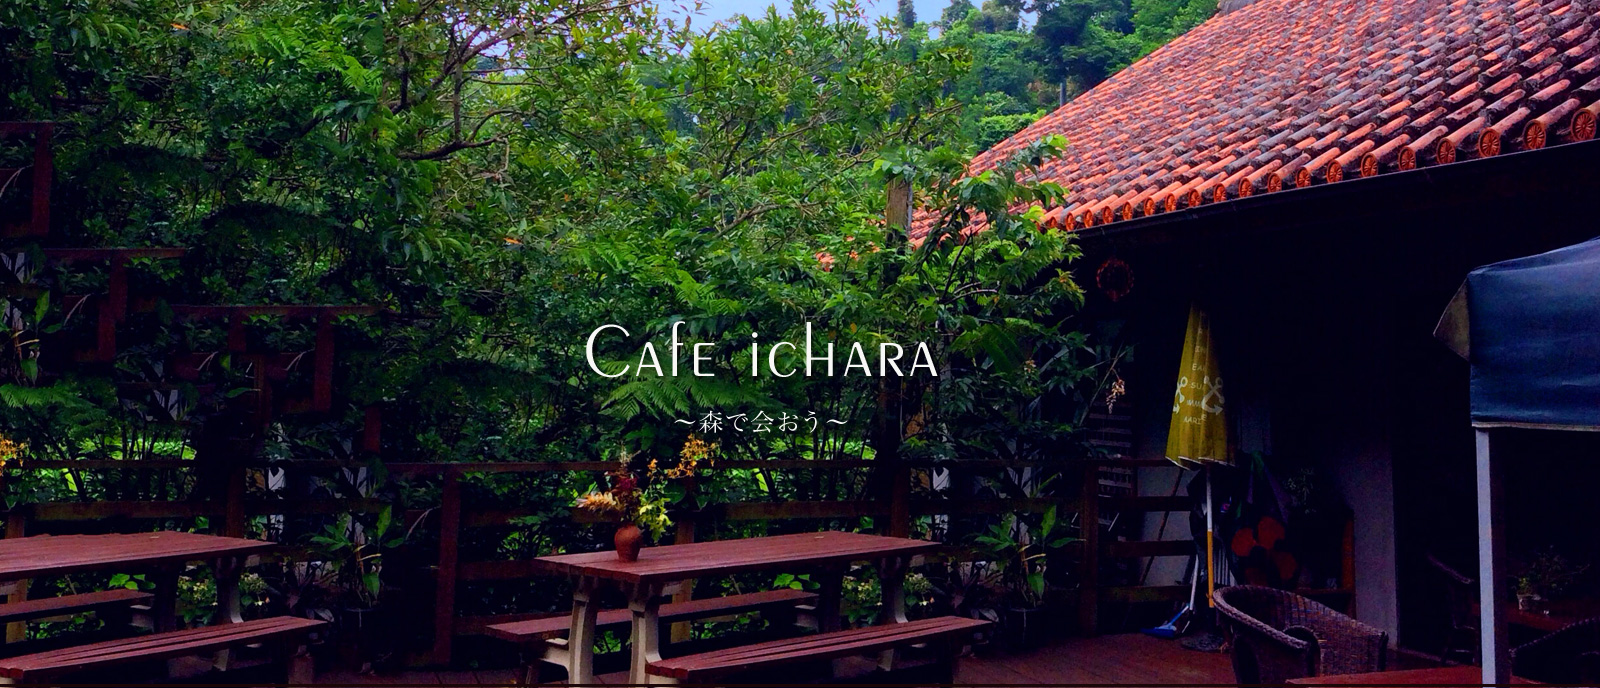 Cafe ichara